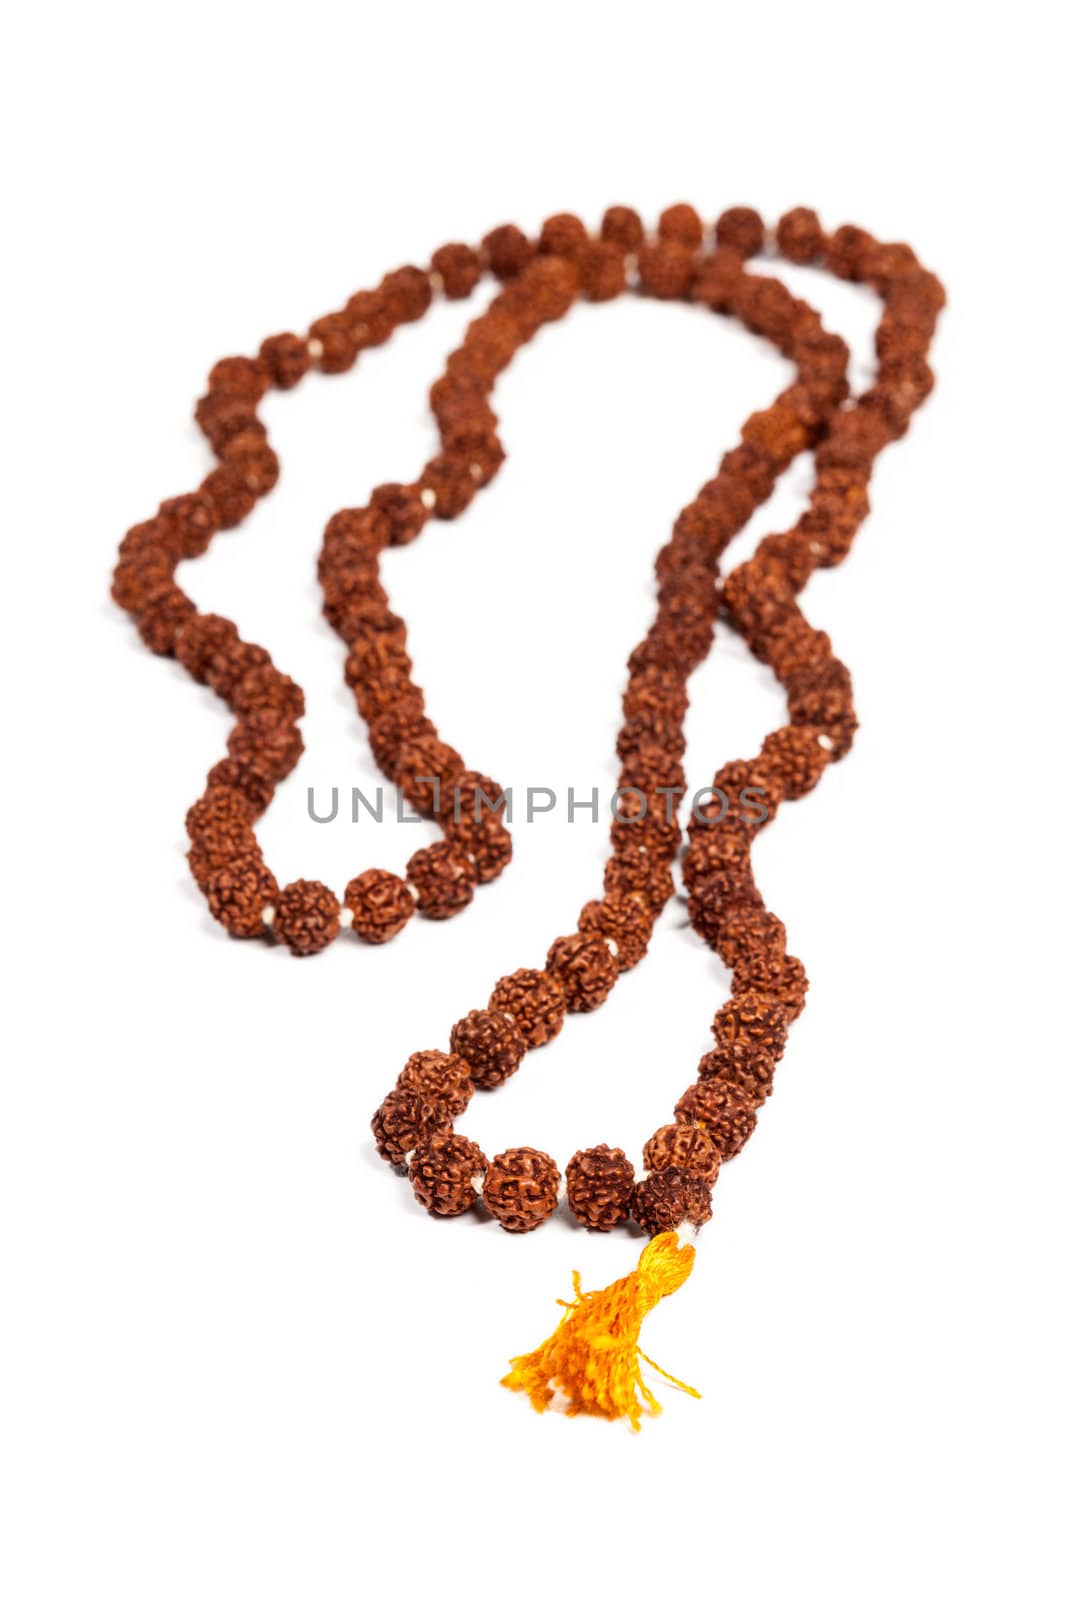 Japa mala (prayer beads) by dimol